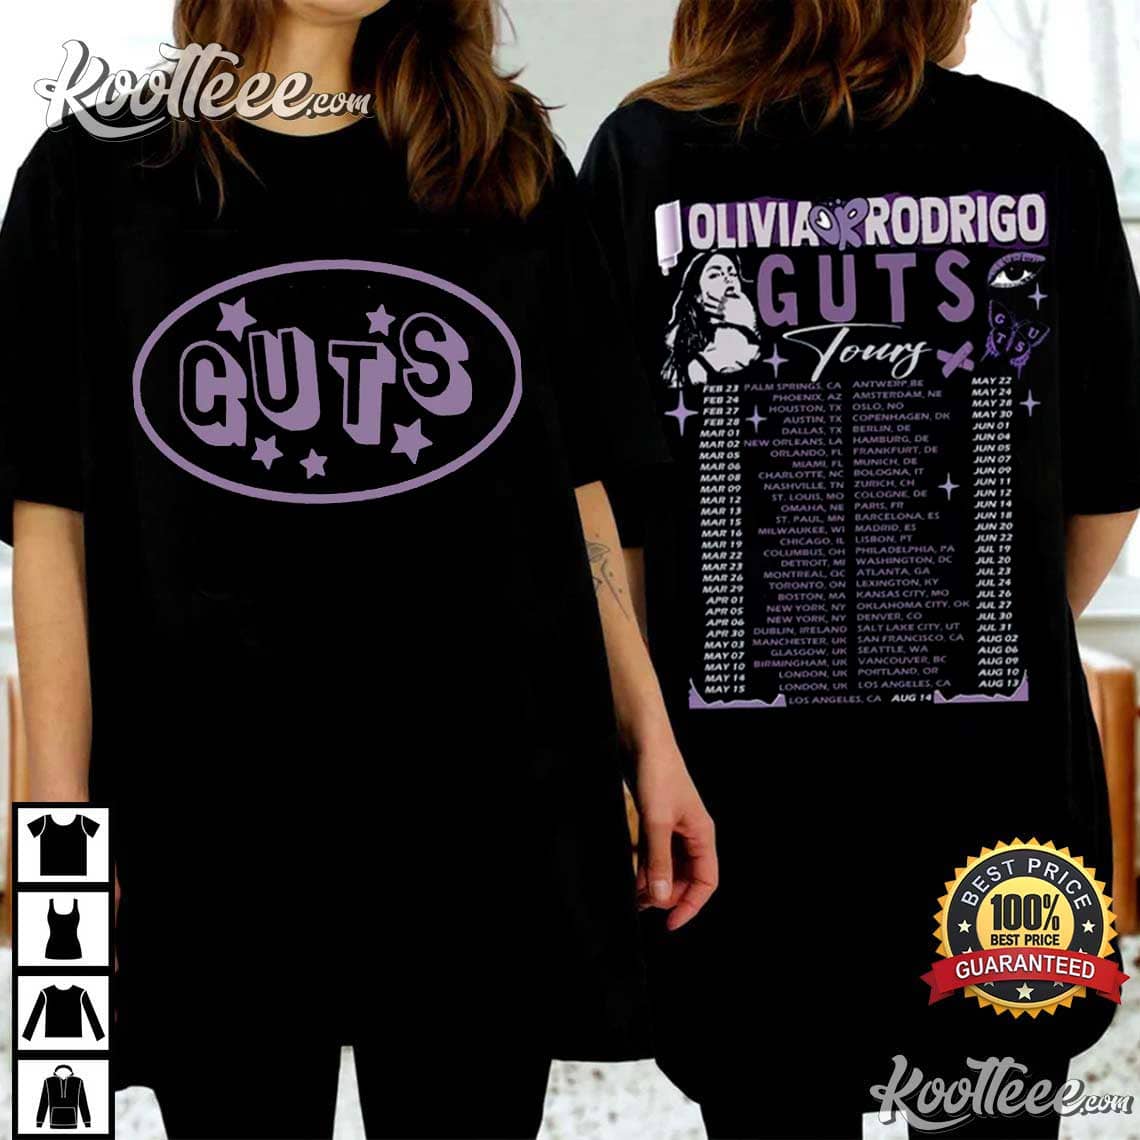 Olivia Rodrigo T-shirt, Olivia Rodrigo Guts Merch, Guts Tour 2024 Shirt